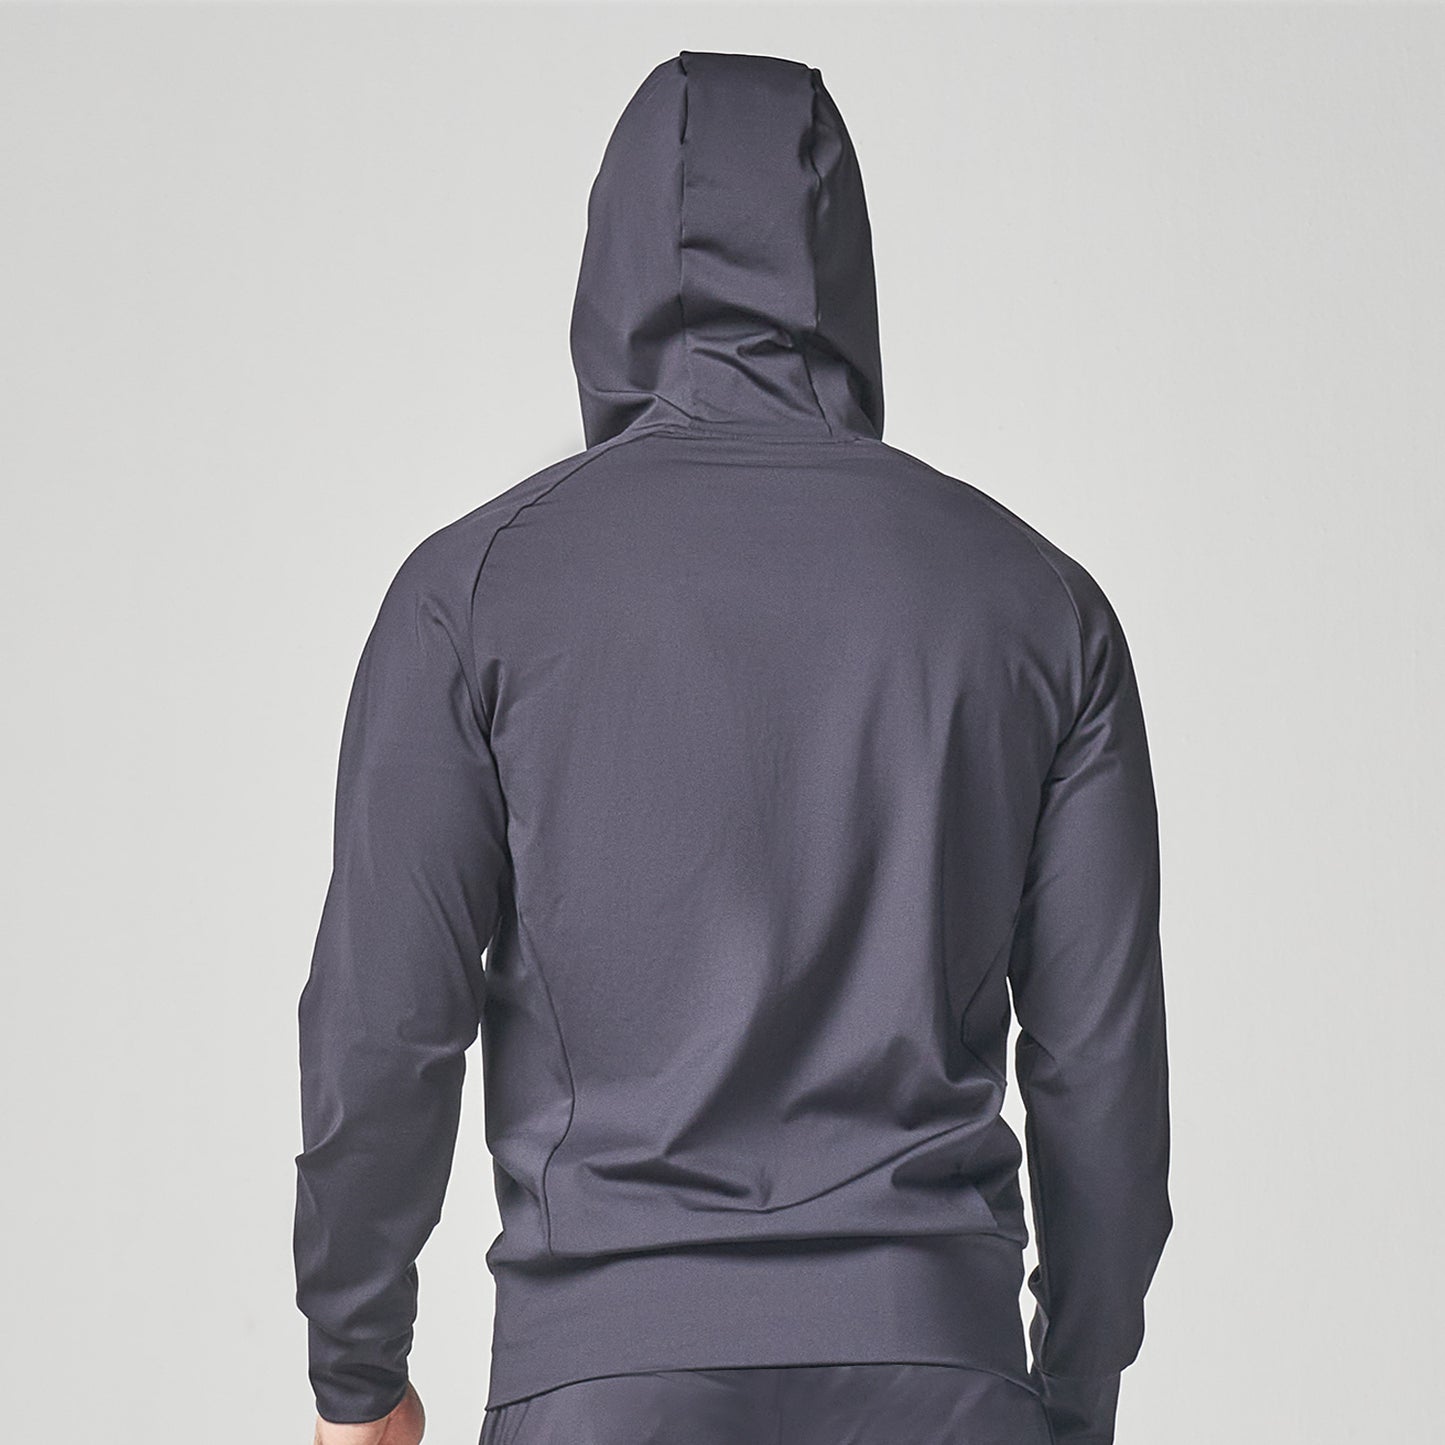 squatwolf-gym-wear-lab360-boost-hoodie-black-workout-hoodies-for-men